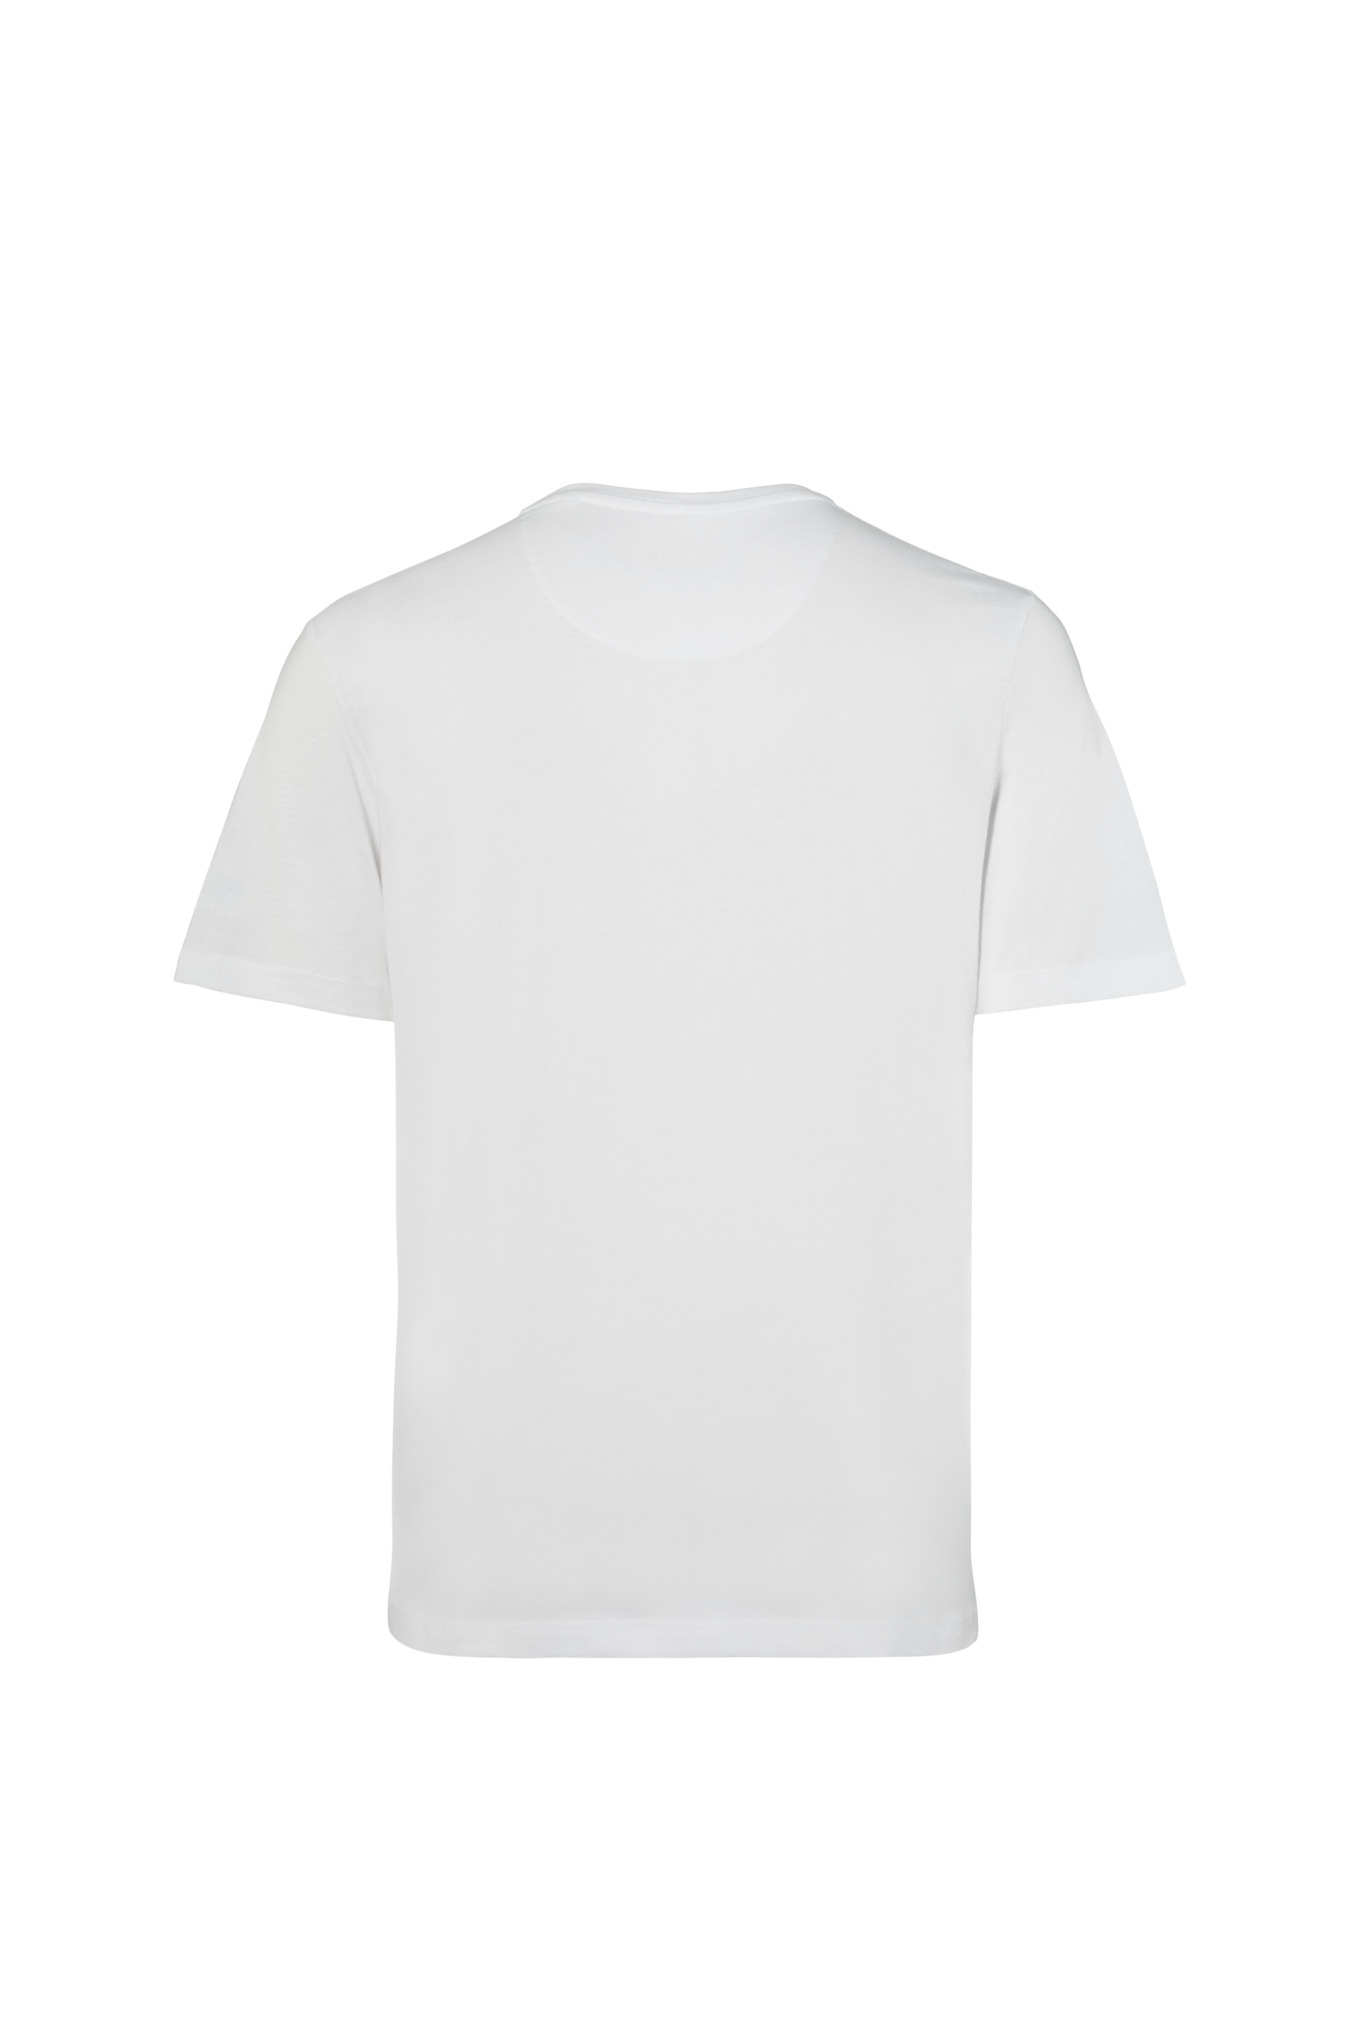 T-Shirt TIMBERSPORTS® biały